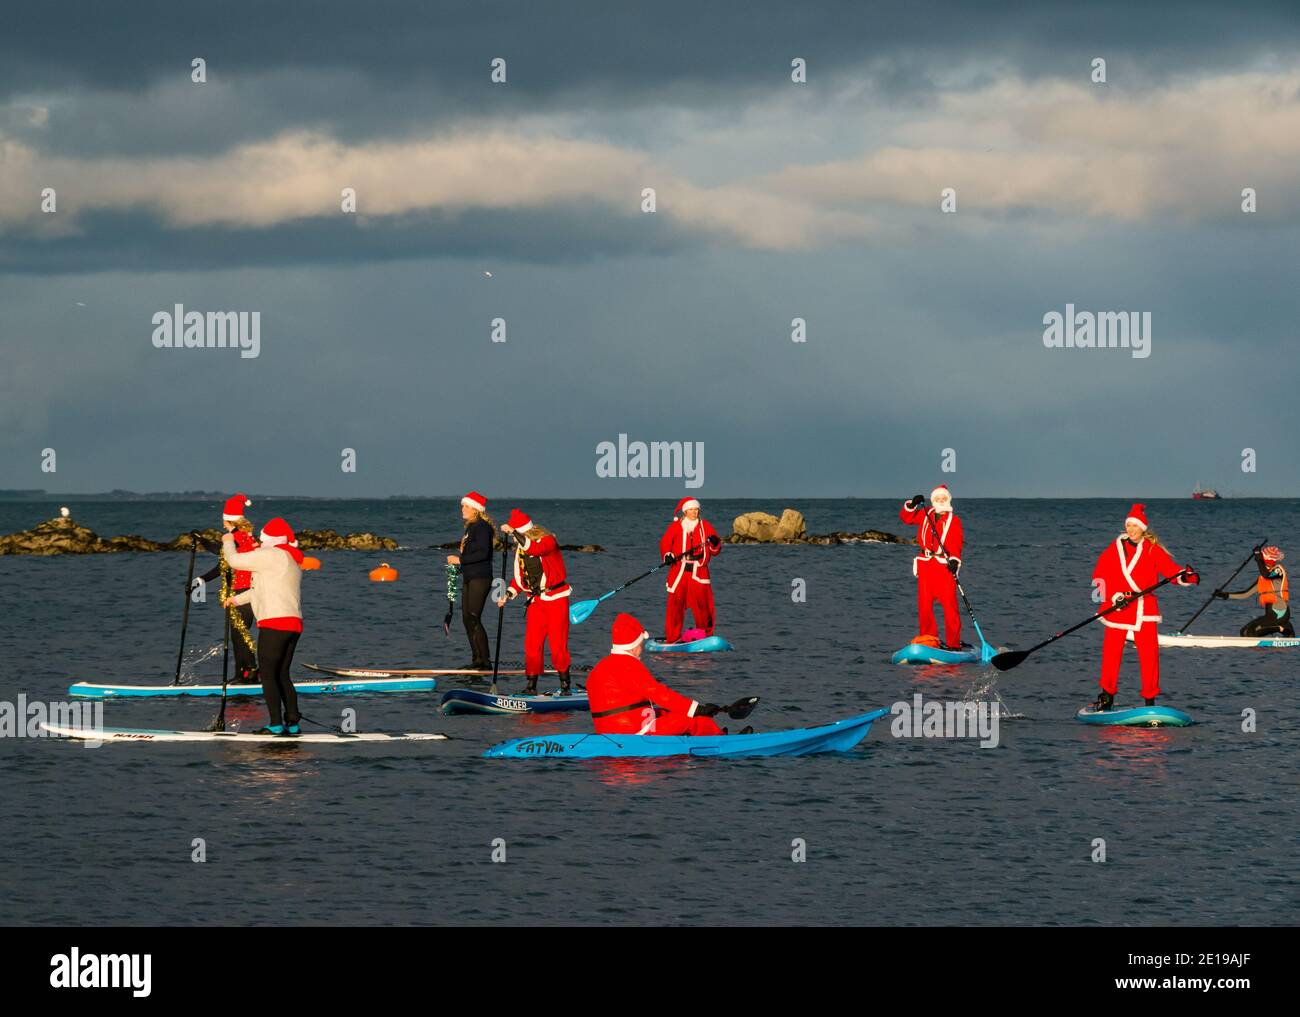 Community charity event: paddle boarders in Santa costumes, North Berwick, East Lothian, Scotland, UK Stock Photo